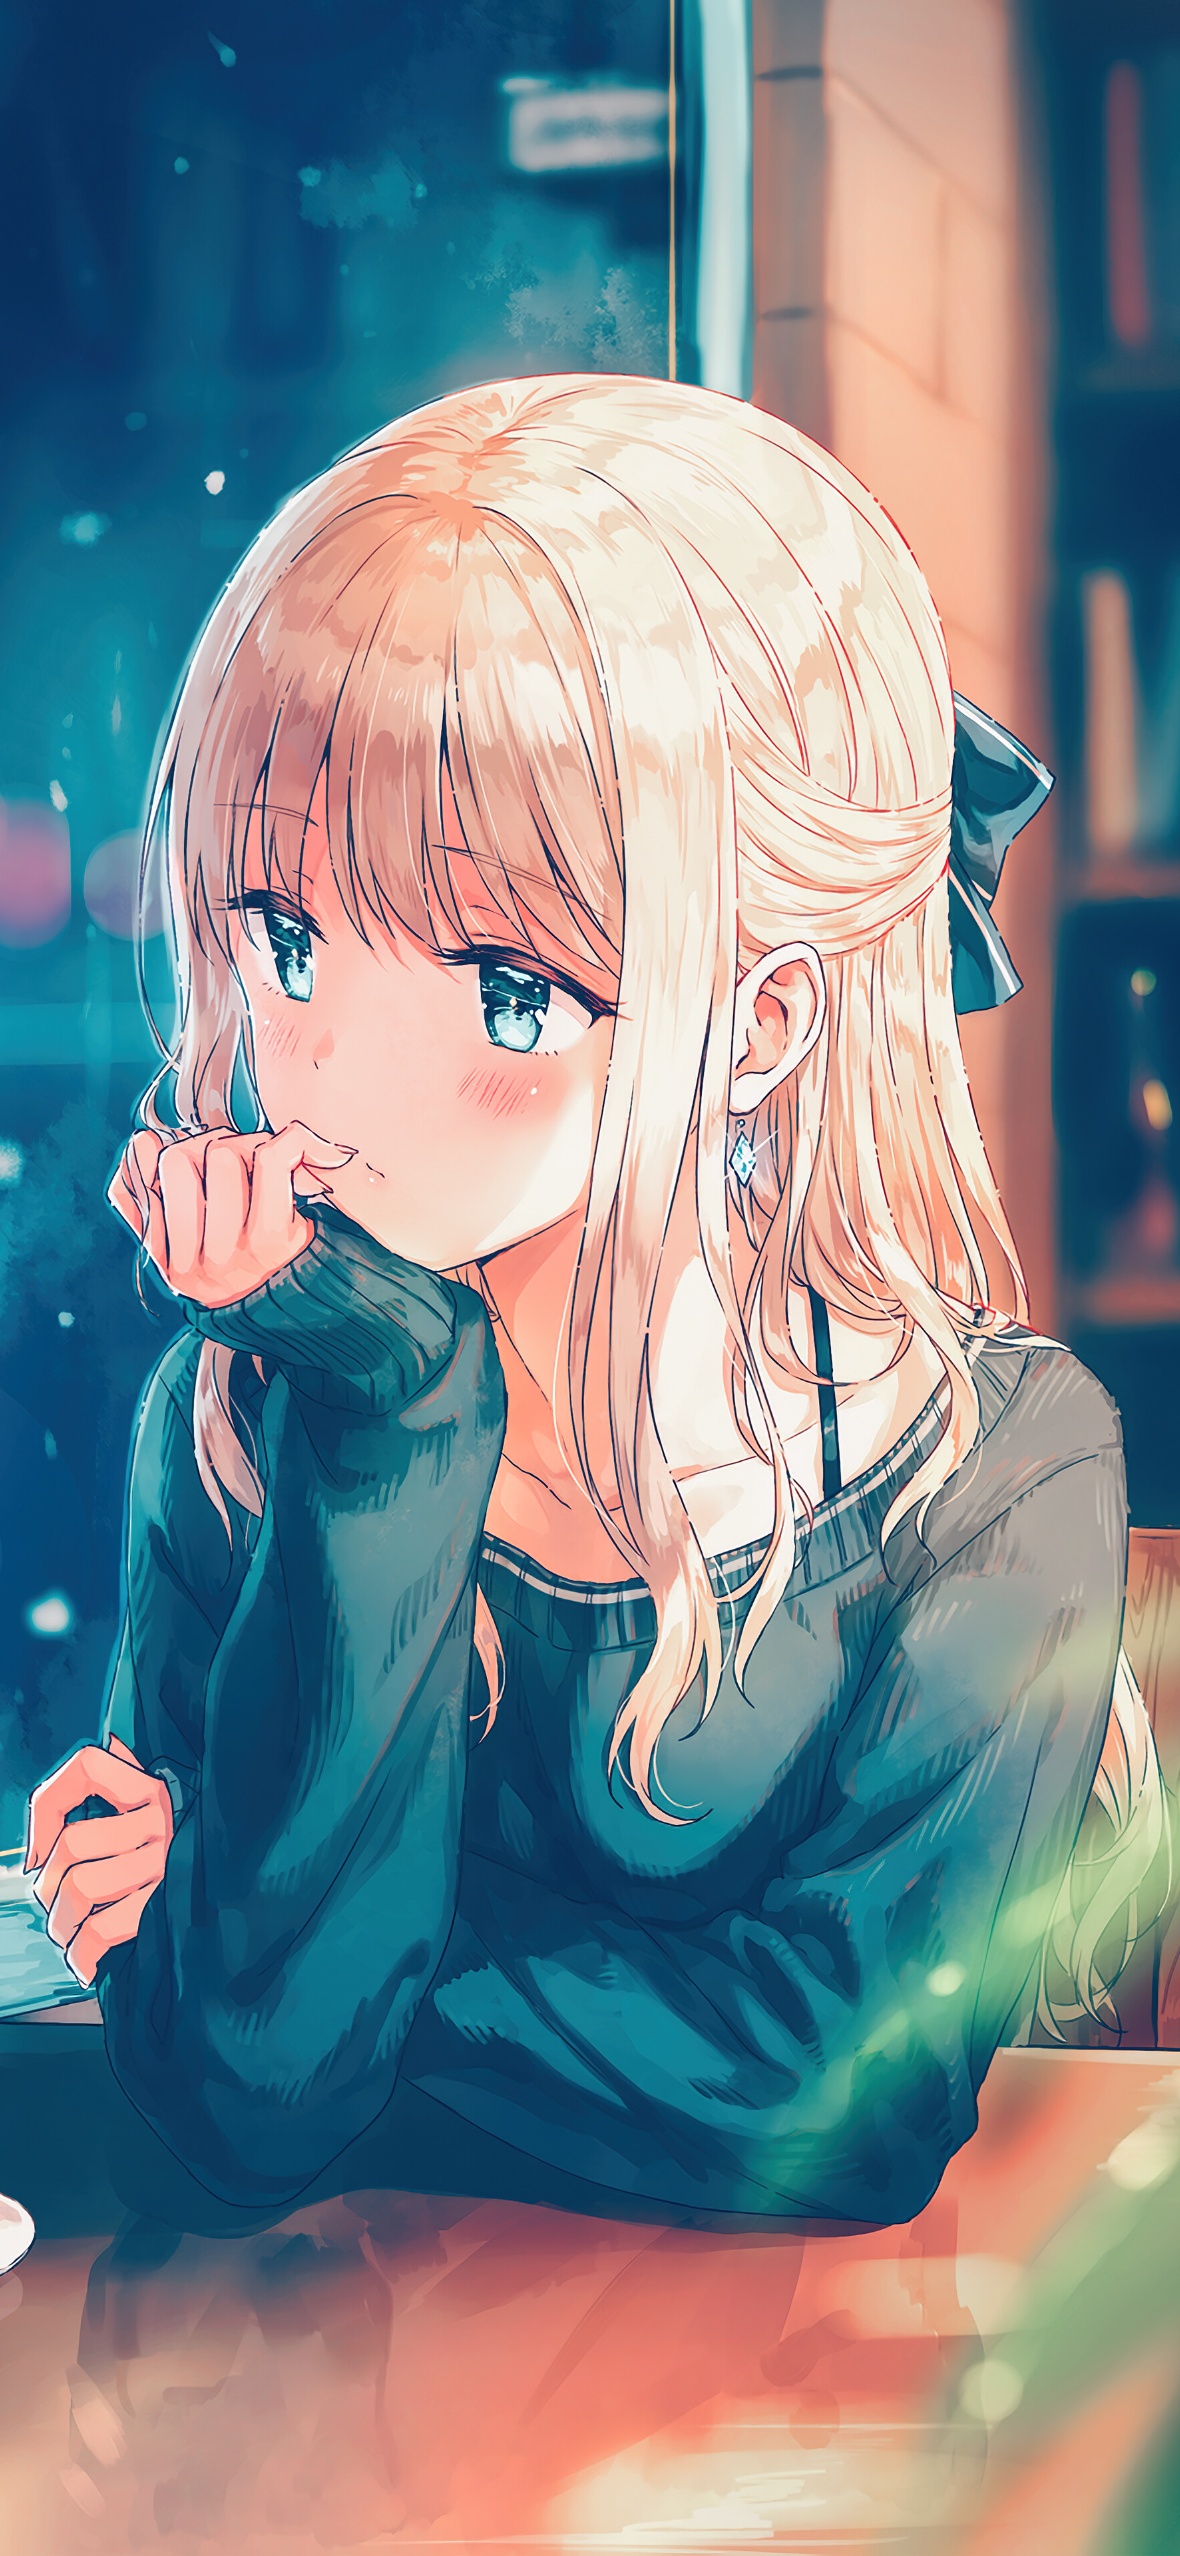 Cute Anime Girl iPhone Wallpaper 4k